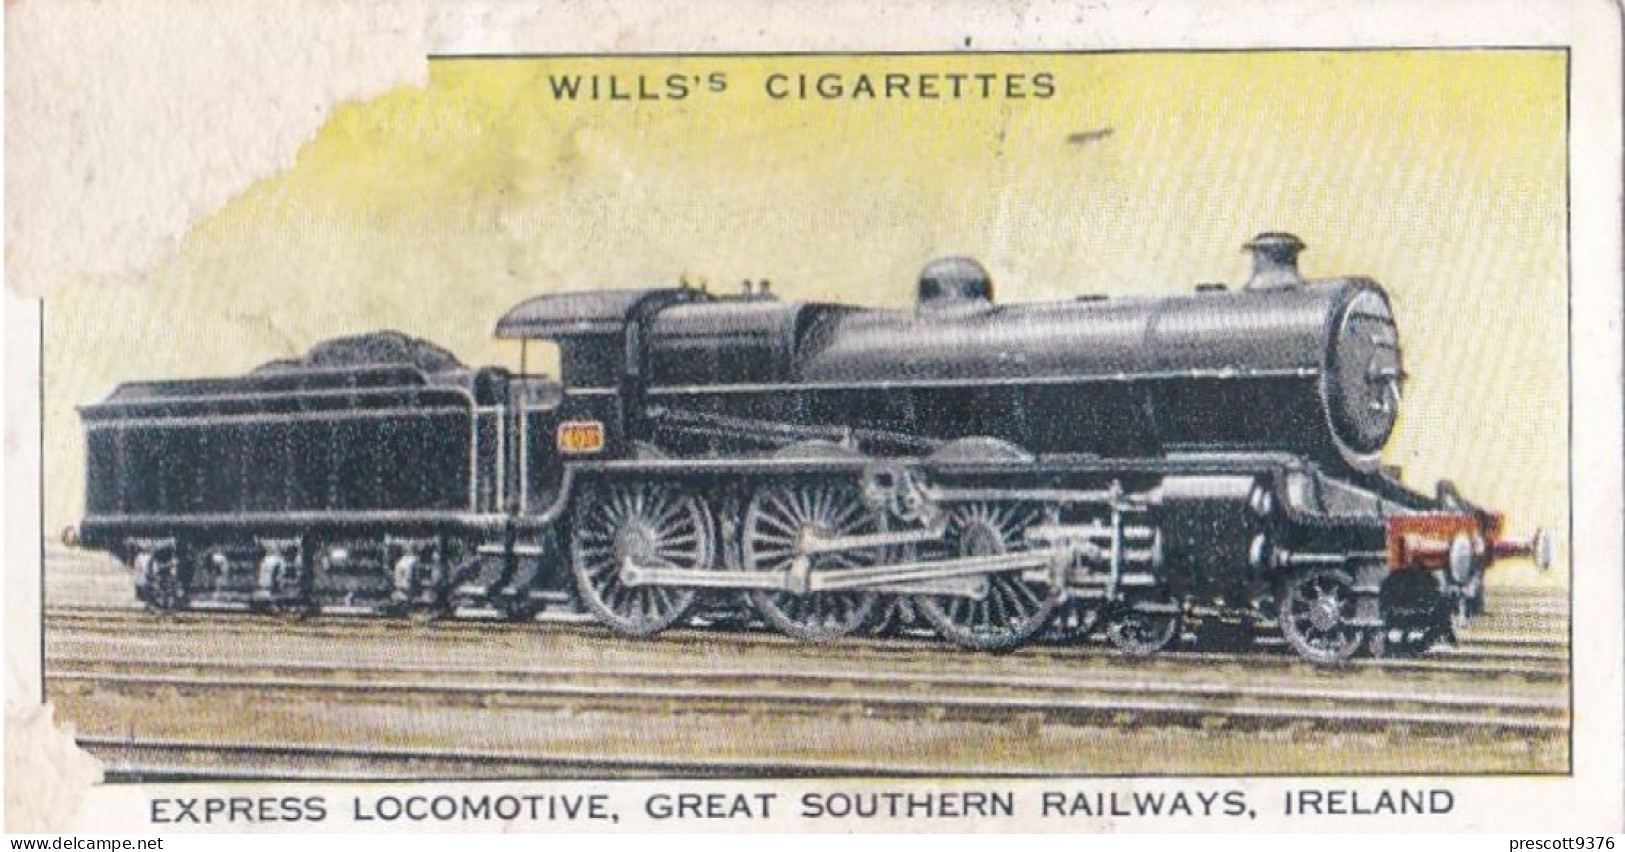 13 Great Southern Railways Ireland - Railway Engines 1936 - Wills Cigarette Card - Original - Wills